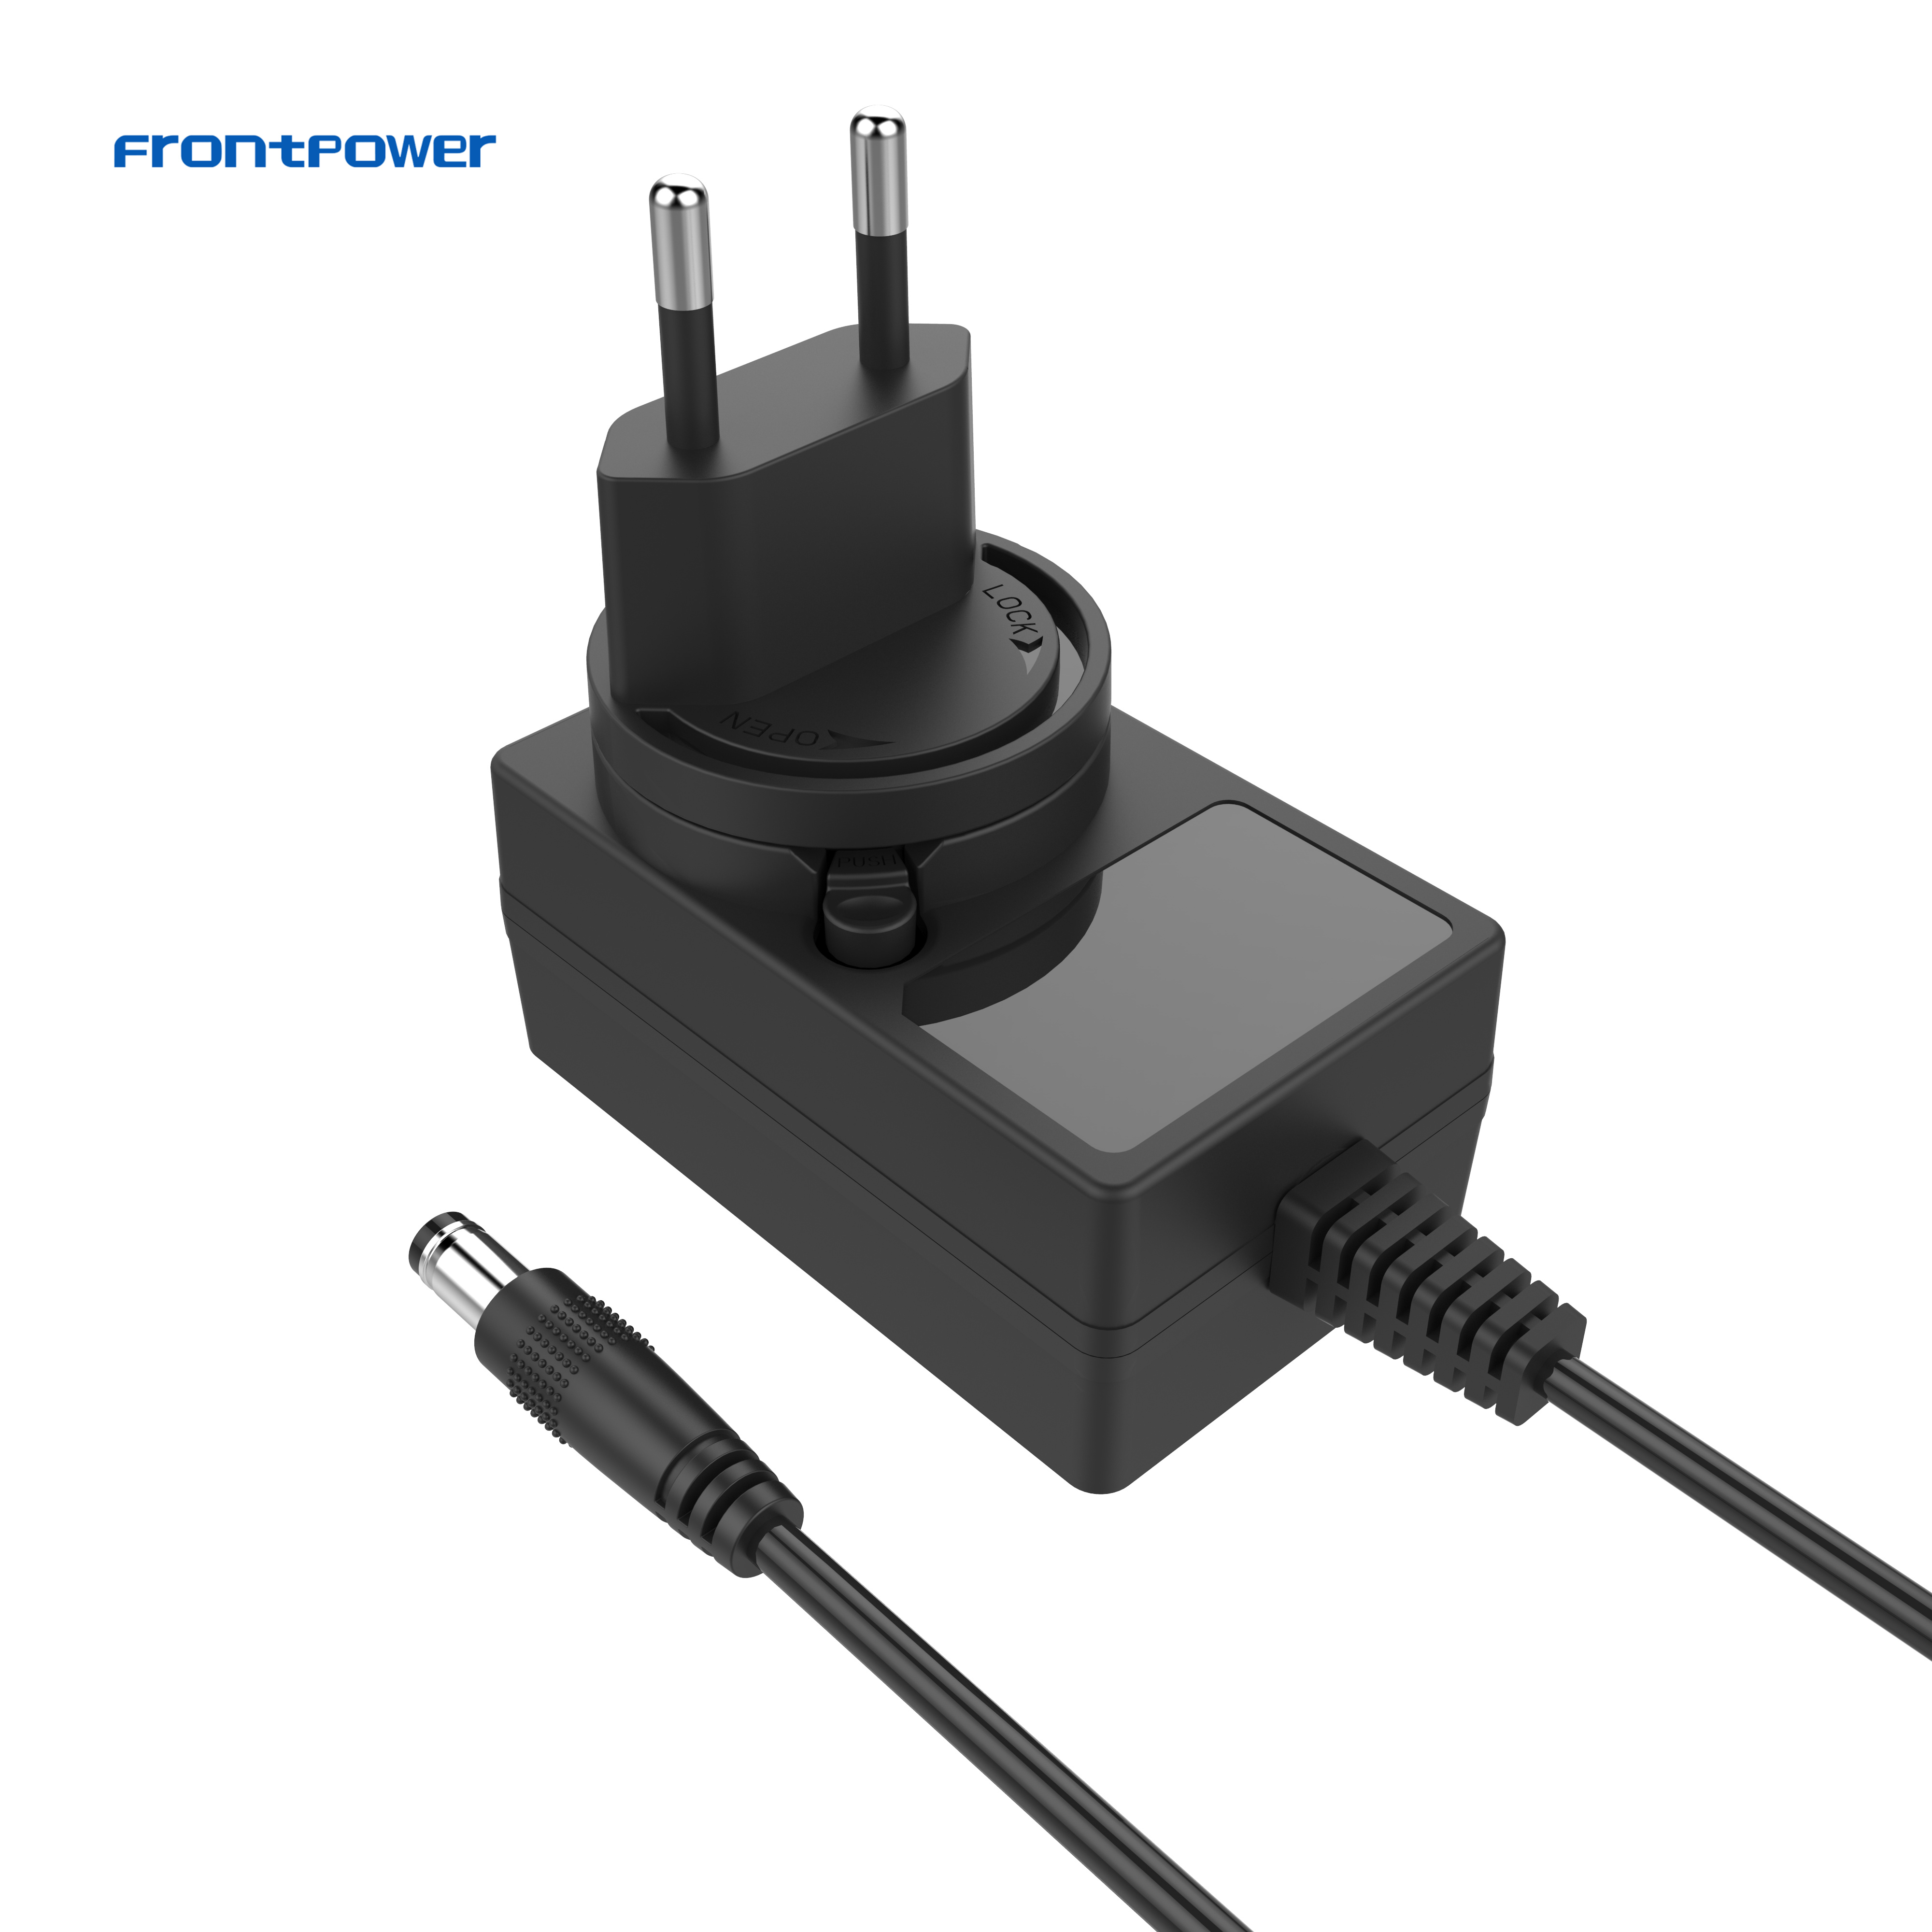 interchangeable plug power supply 9v 2a 12v 2a 24v 1a ac dc adapter with UL CB CE GS EMC SAA KC FCC PSE CCC